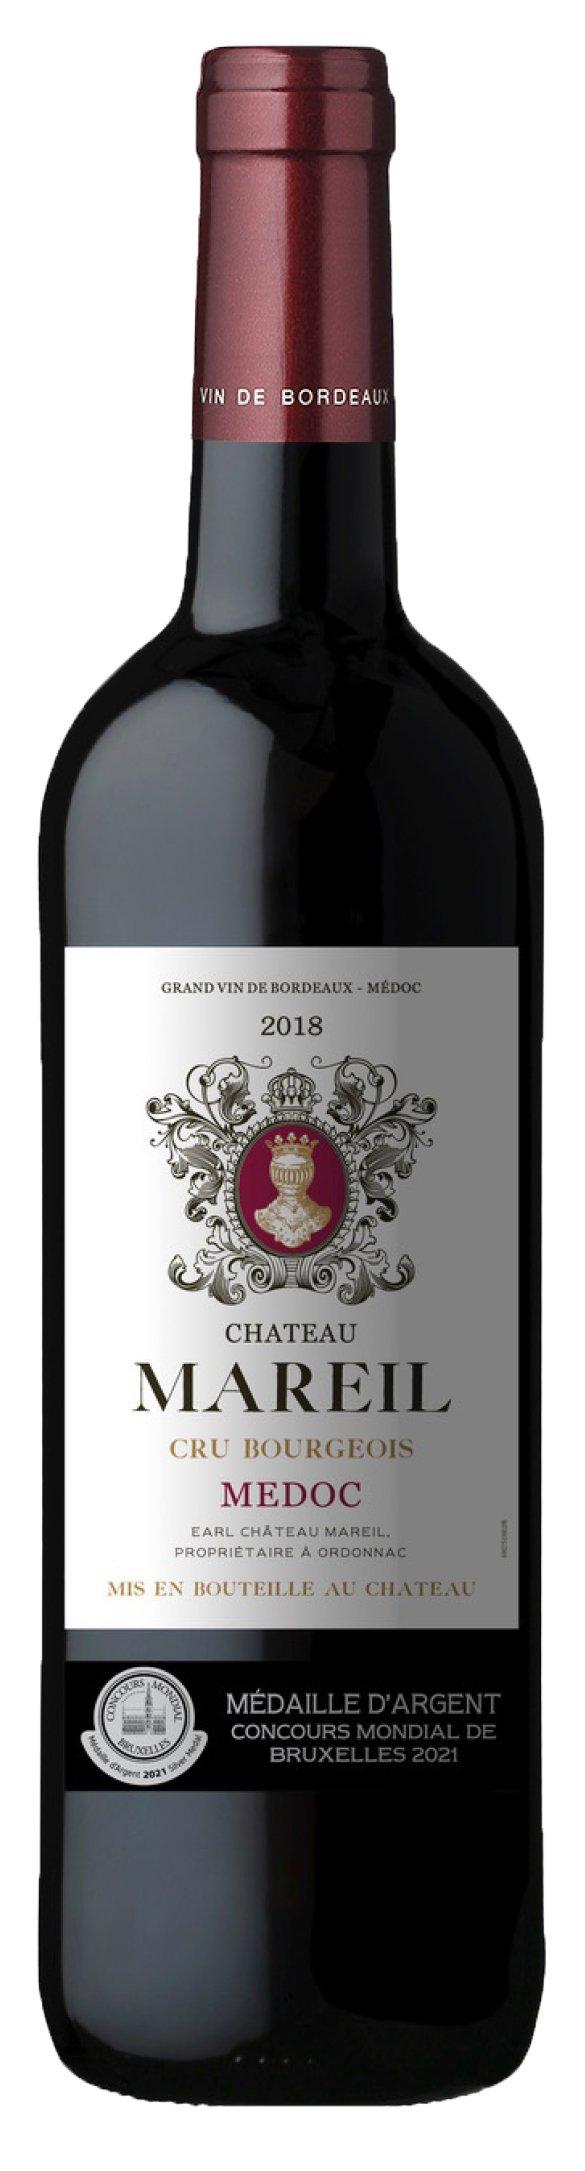 Chateau Mareil 2018 Medoc, Wine | Express Cru Bourgeois